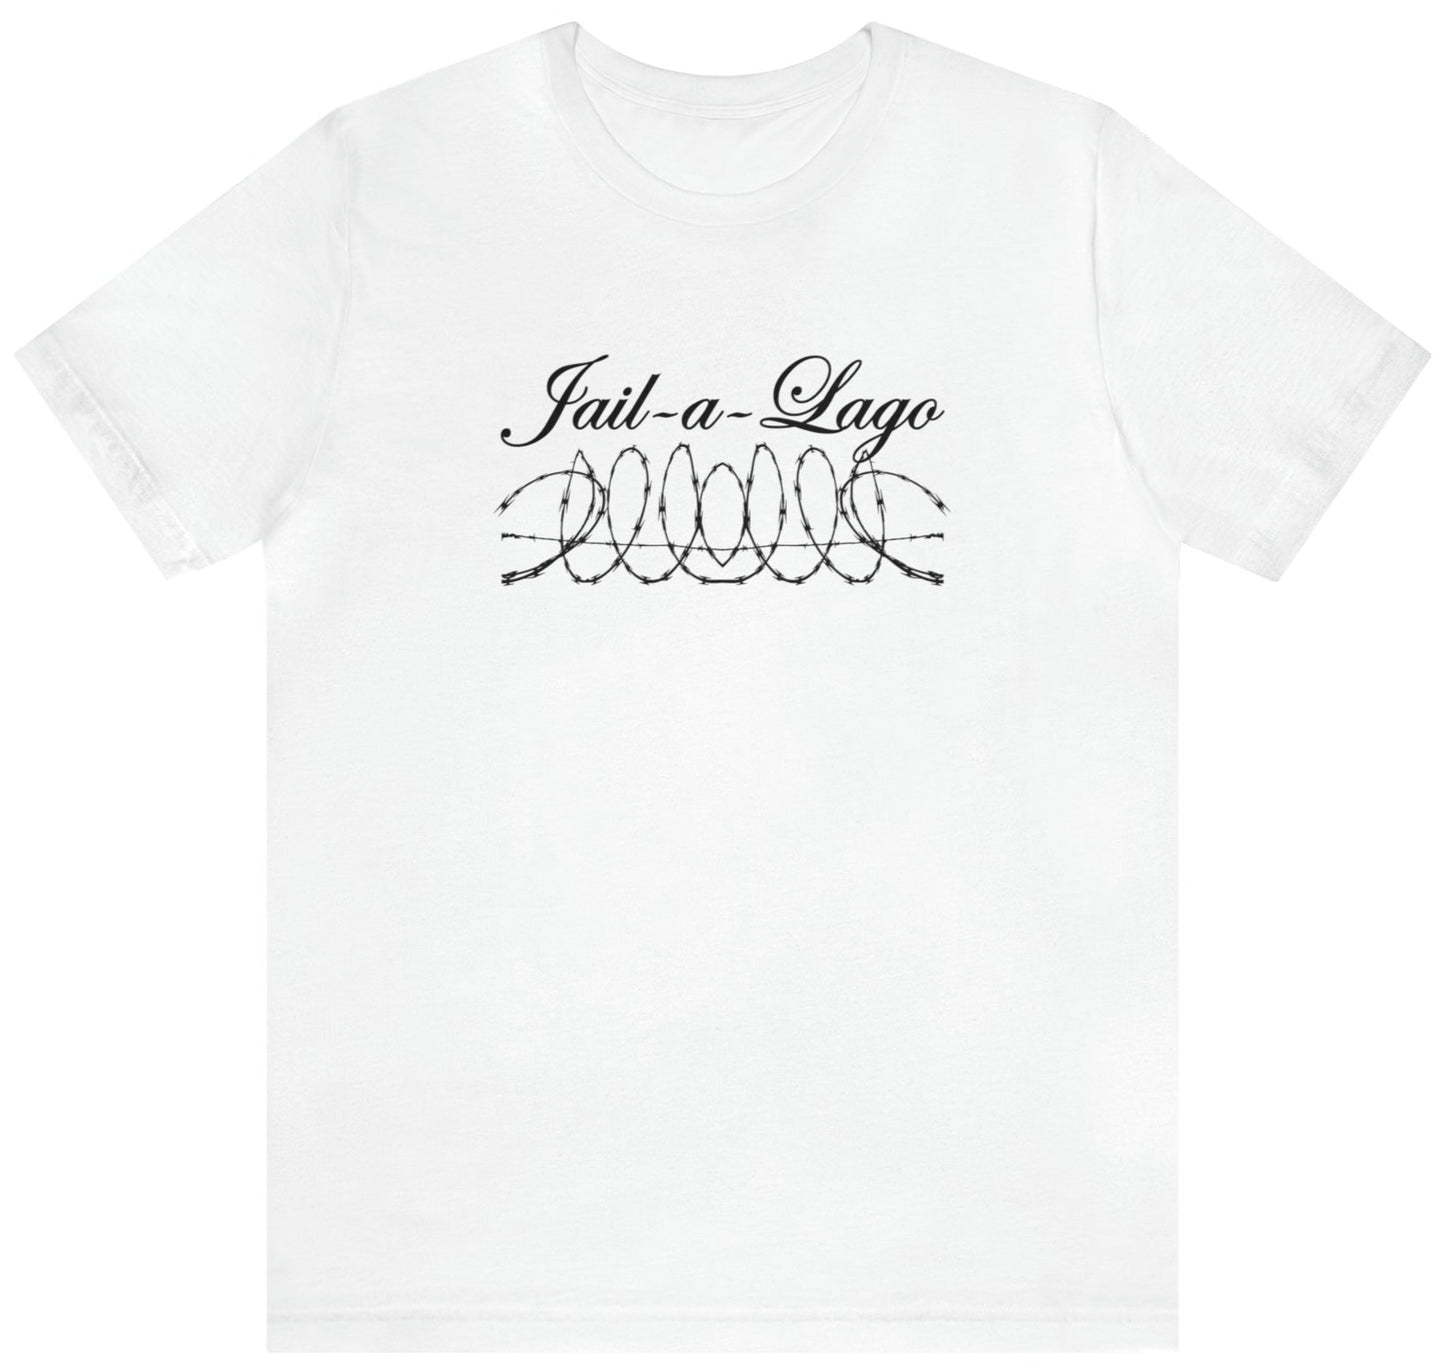 Jail-a-Lago - Unisex T-Shirt